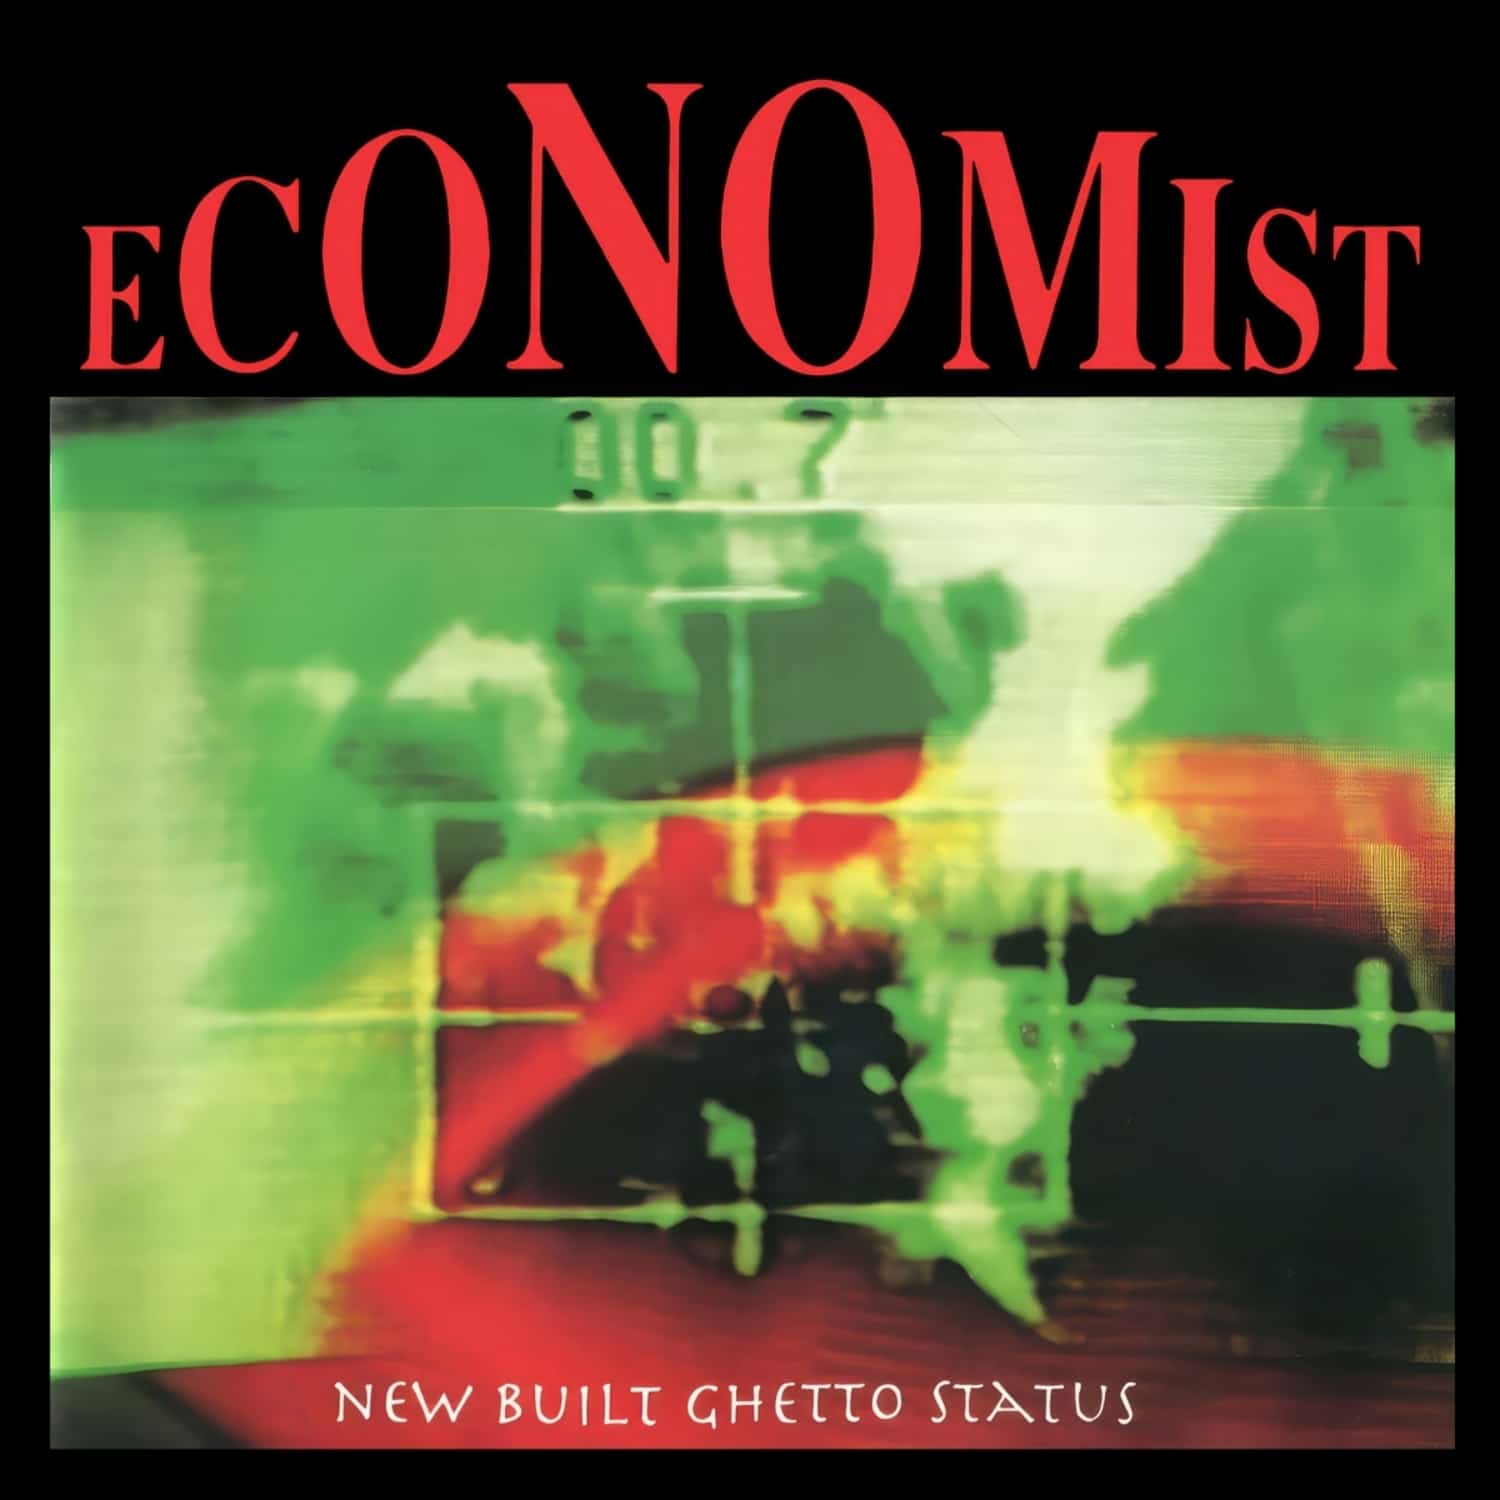 Economist - NEW BUILT GHETTO STATUS 